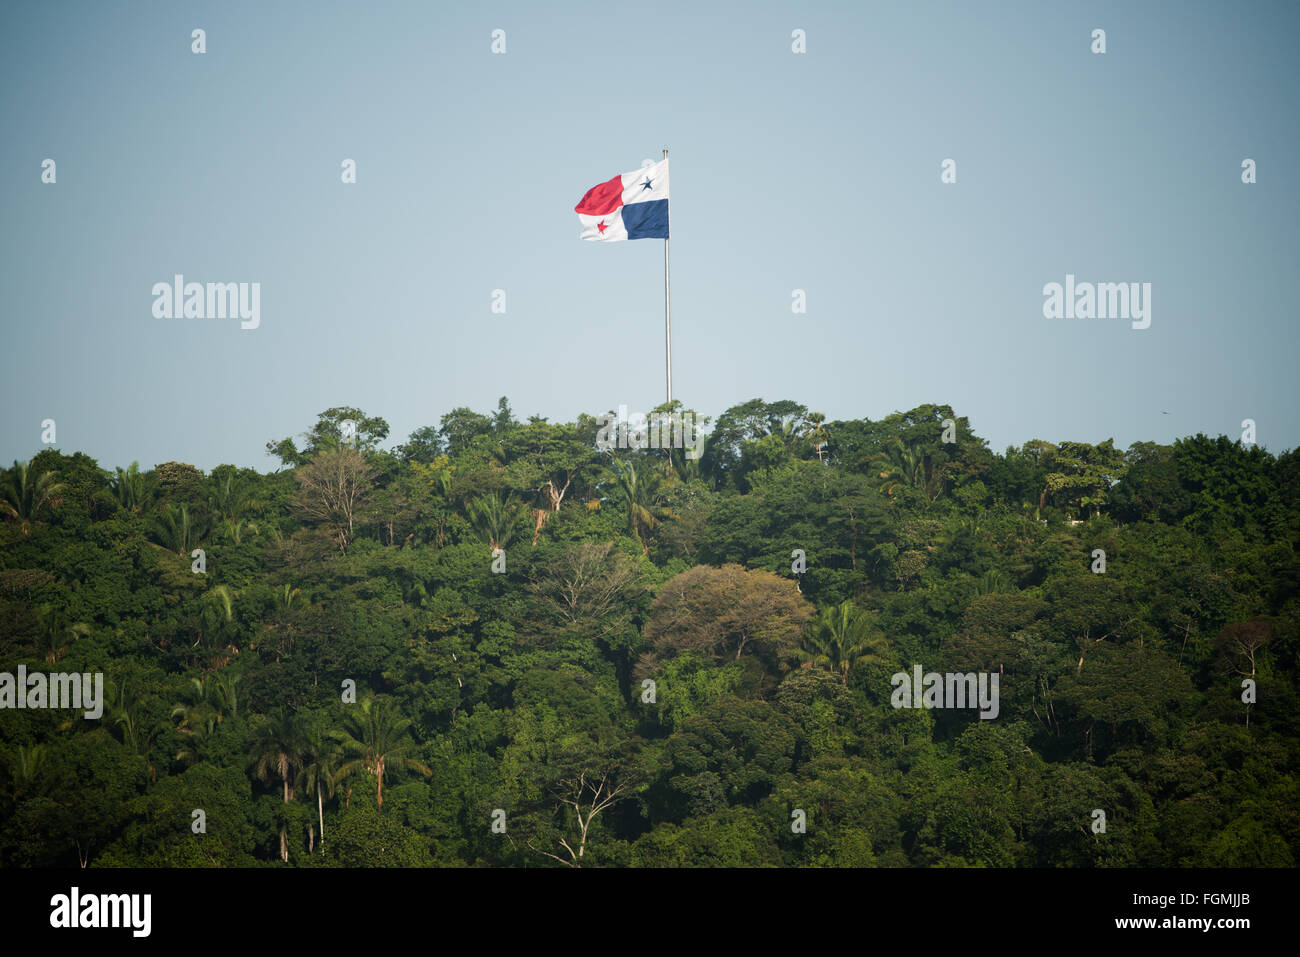 PANAMA CITY, Panama--A large Panamanian flag flies atop Ancon Hill overlooking Panama City, Panama. Stock Photo